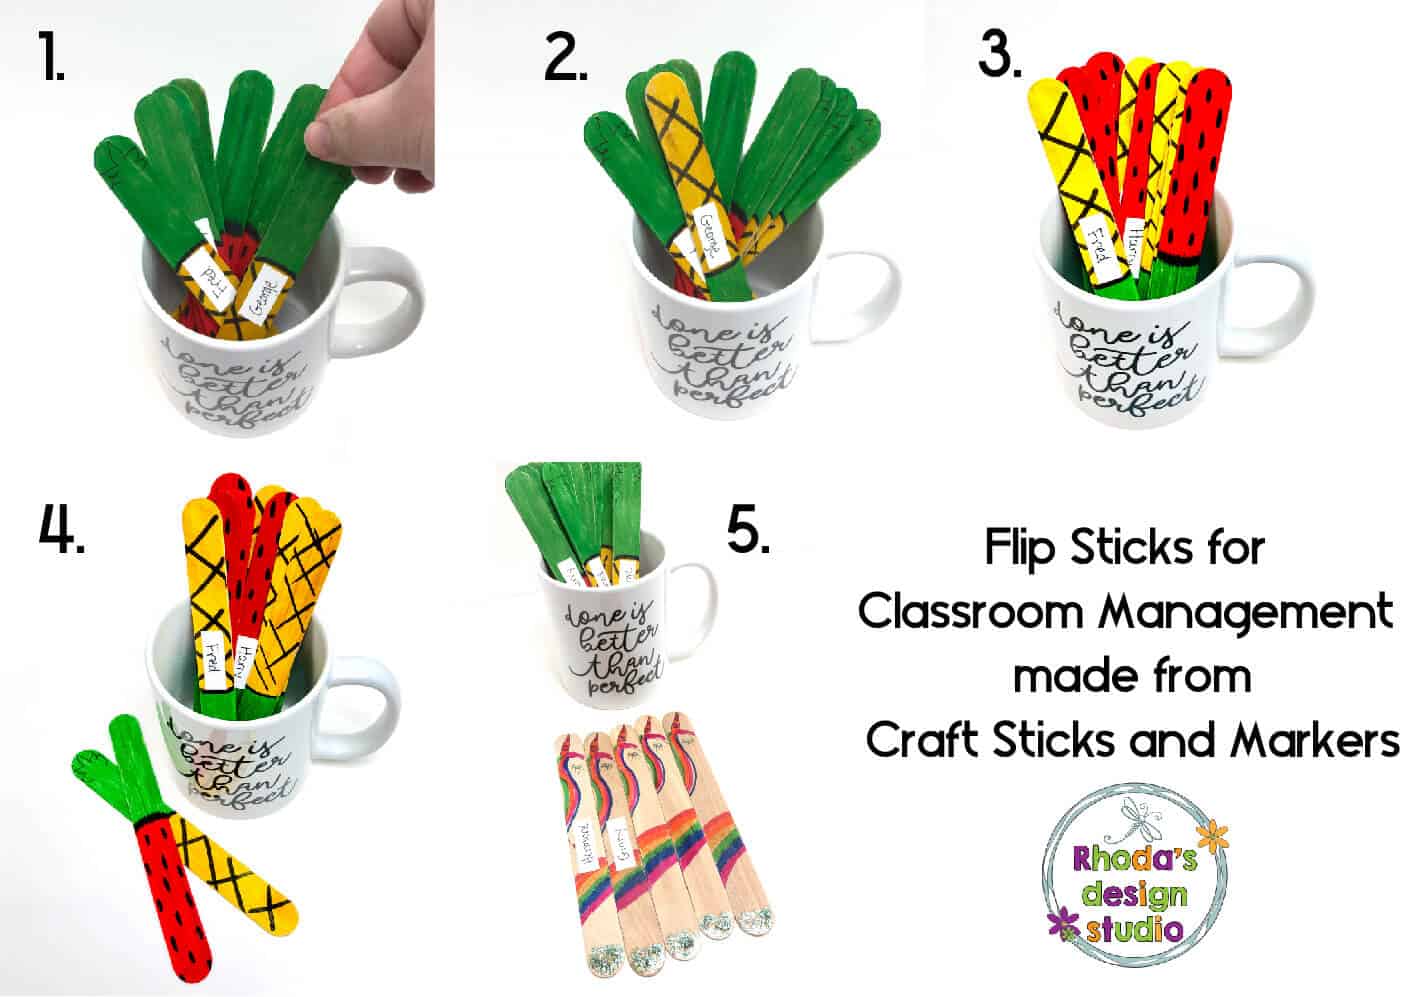 Easy DIY Flip Sticks Help with Classroom Management